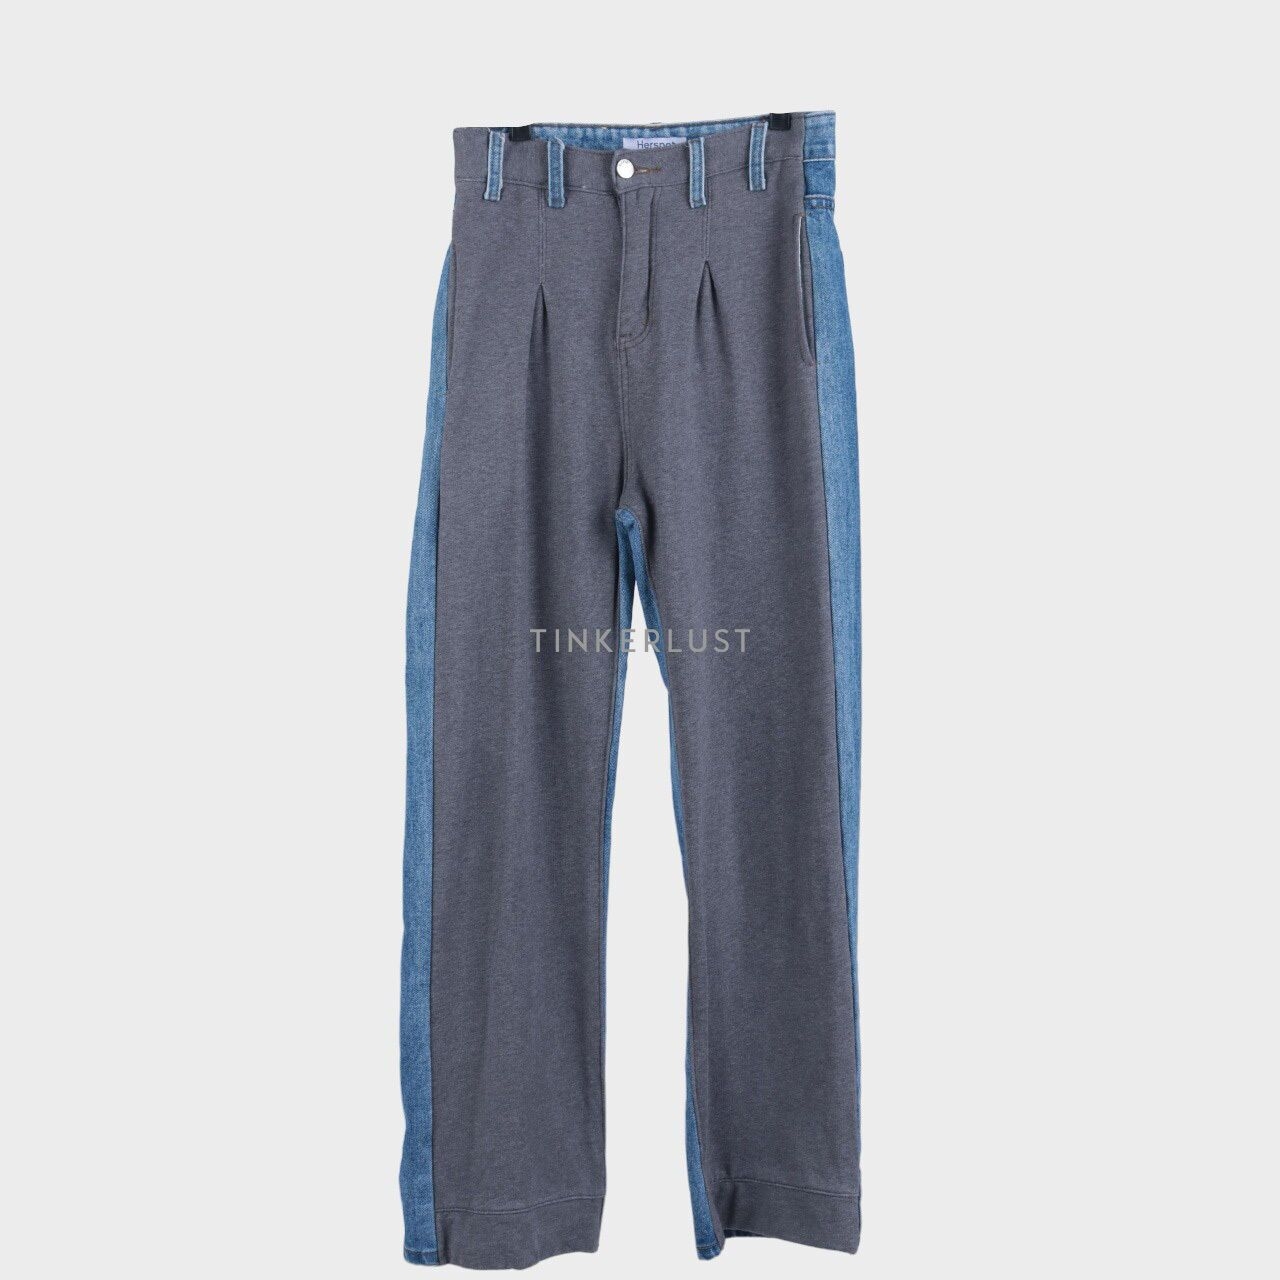 Herspot Blue & Grey Long Pants